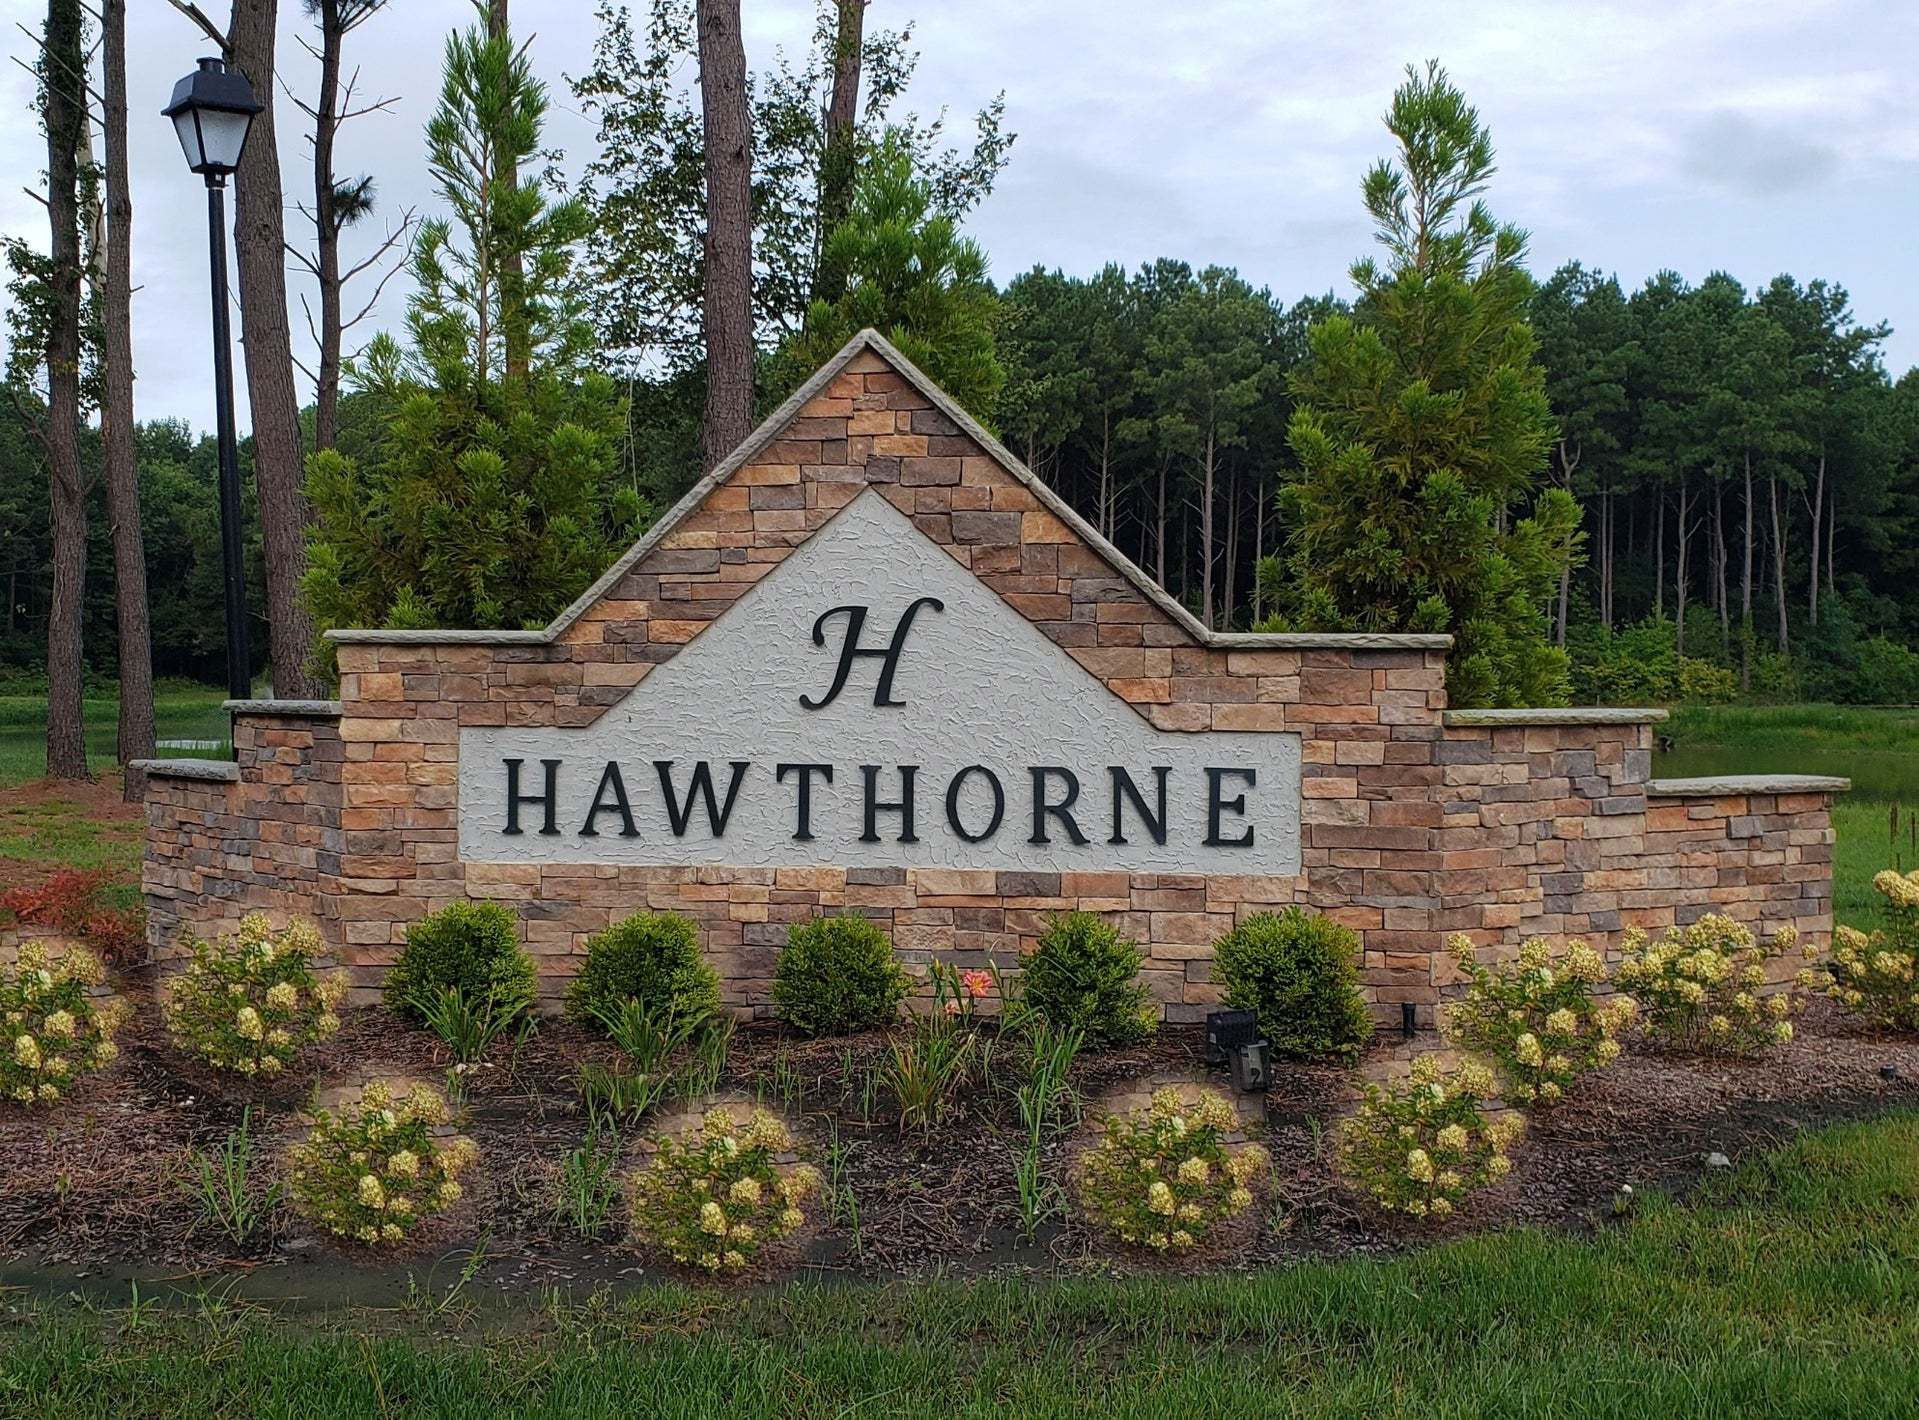 Hawthorne Community Entrance